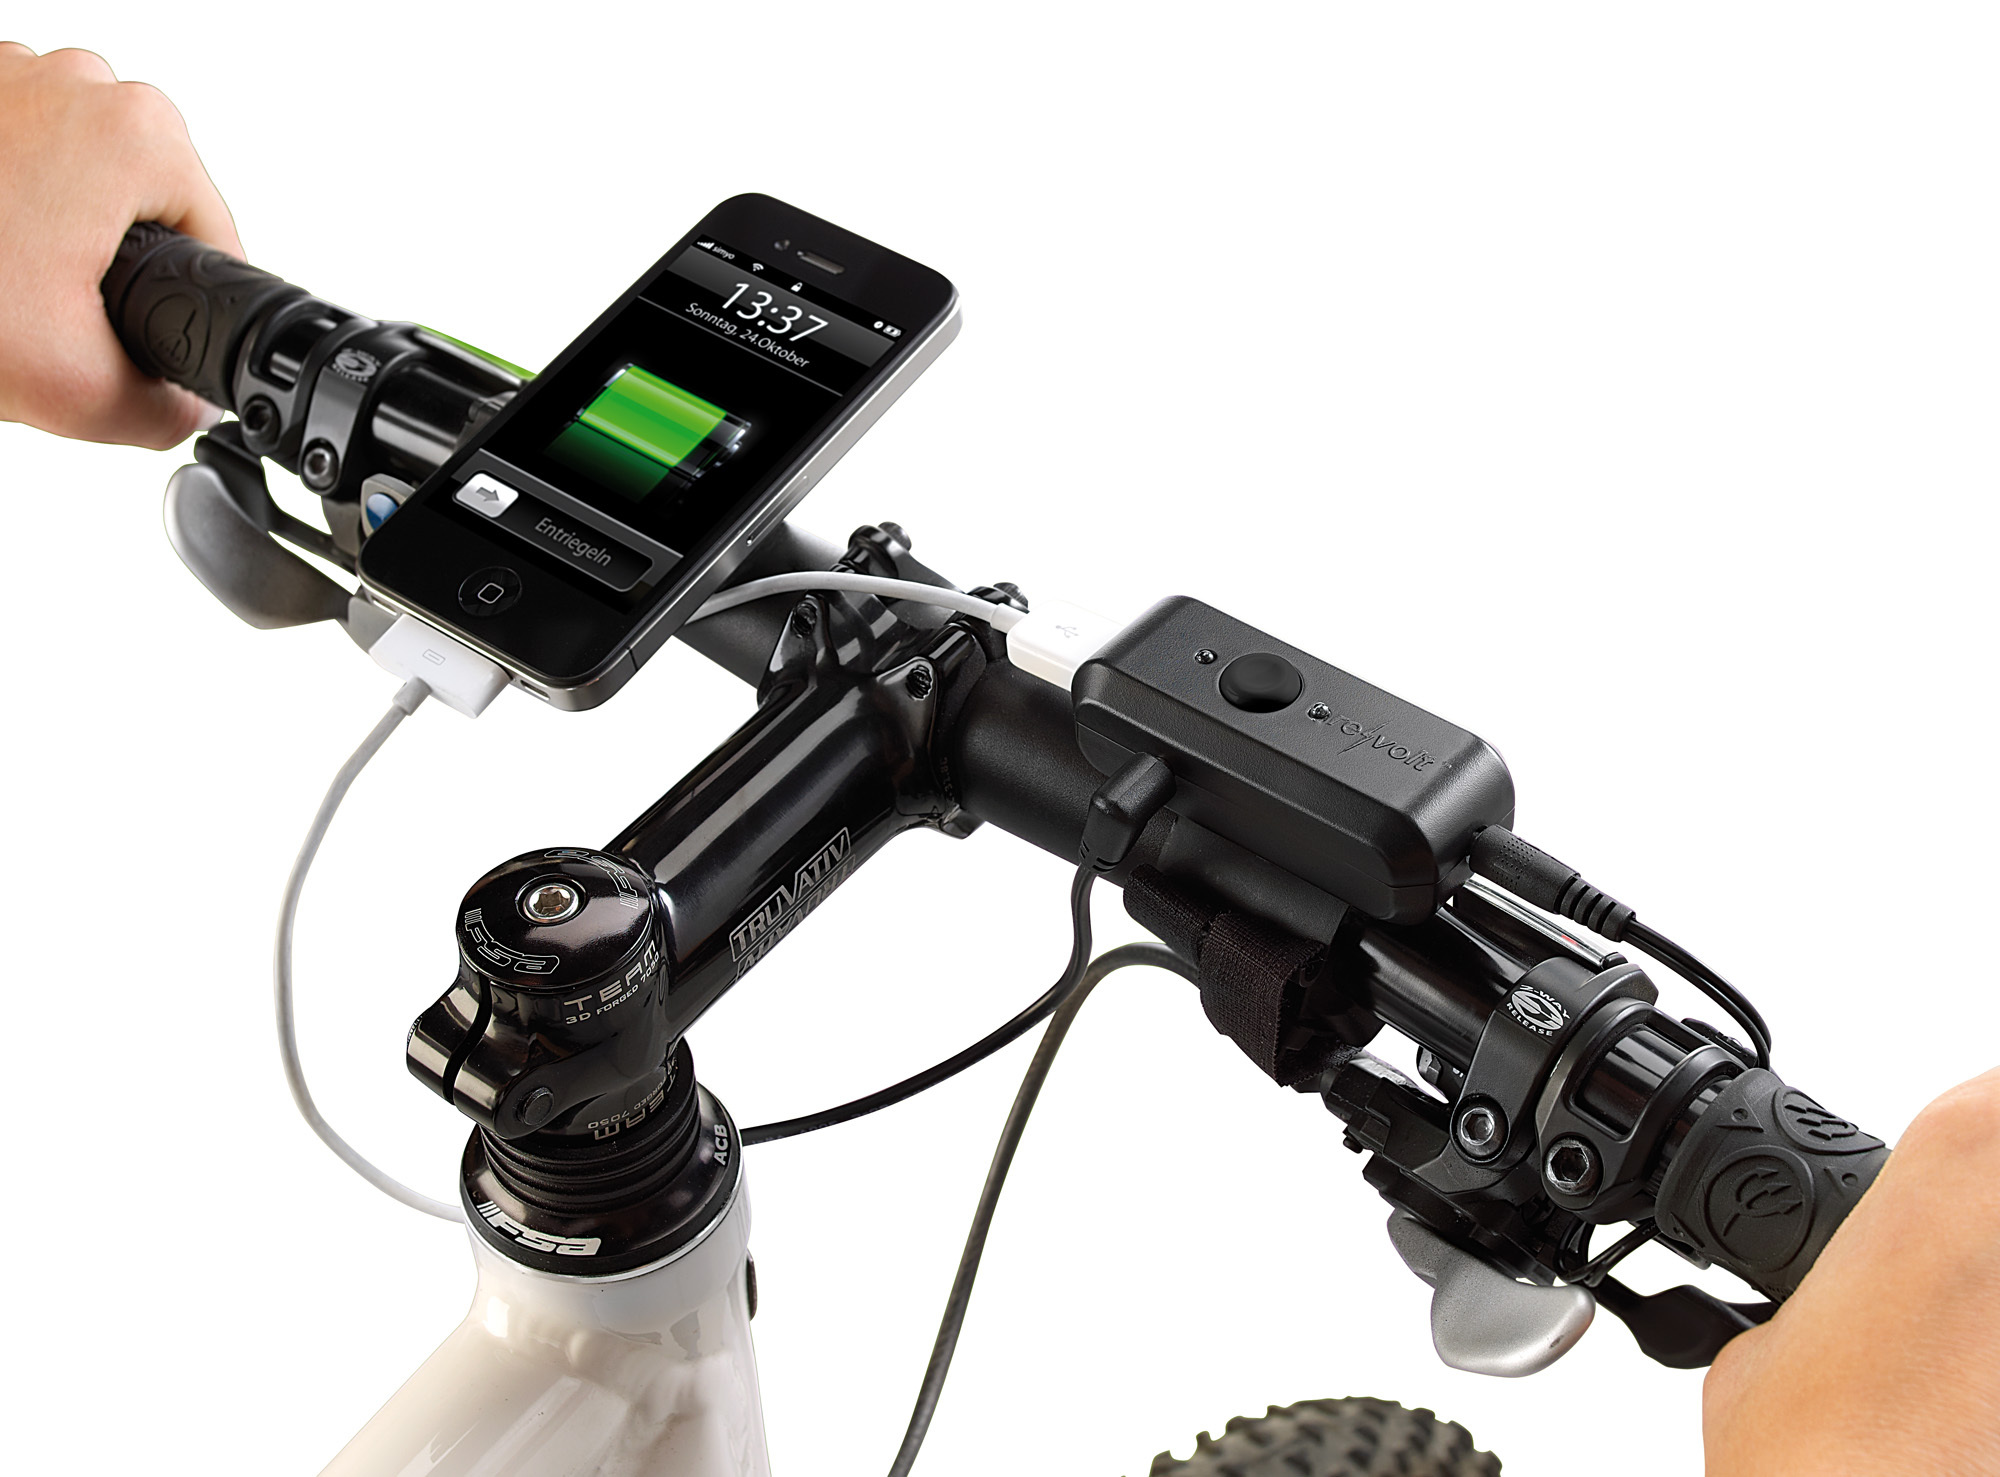 Fahrrad Ladegerät Für Iphone